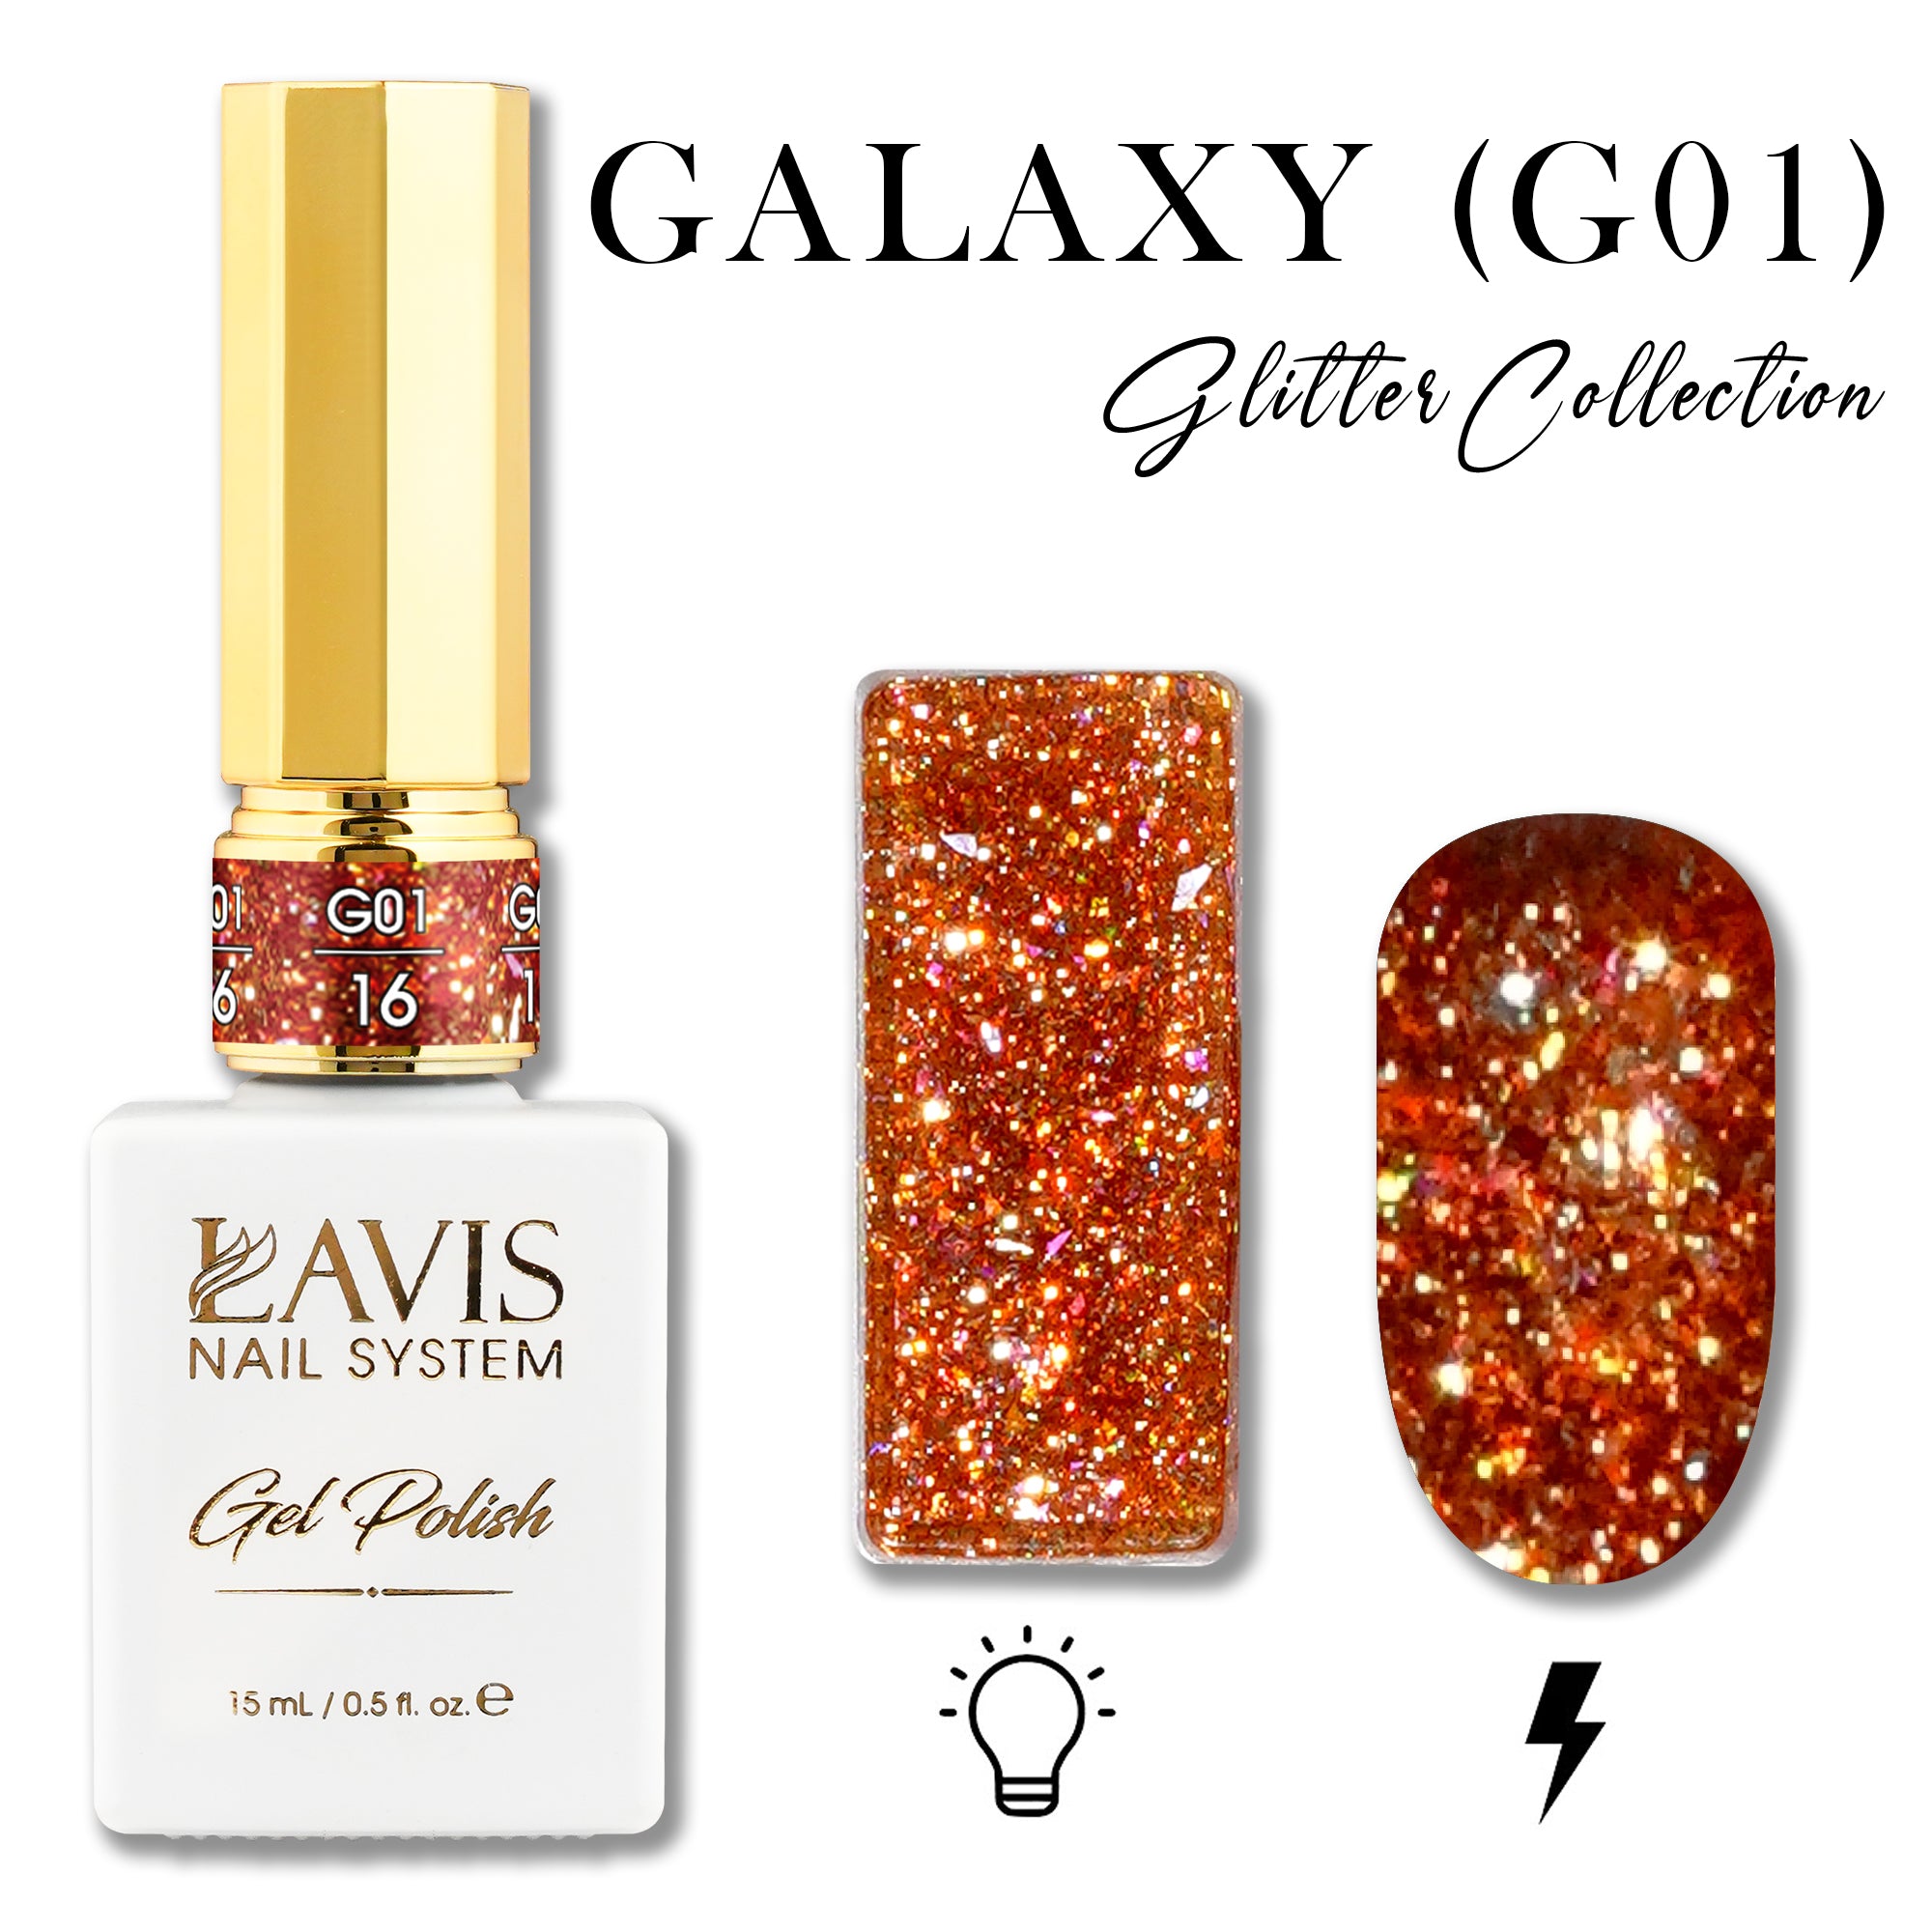 LAVIS Glitter G01 - 16 - Gel Polish 0.5 oz - Galaxy Collection